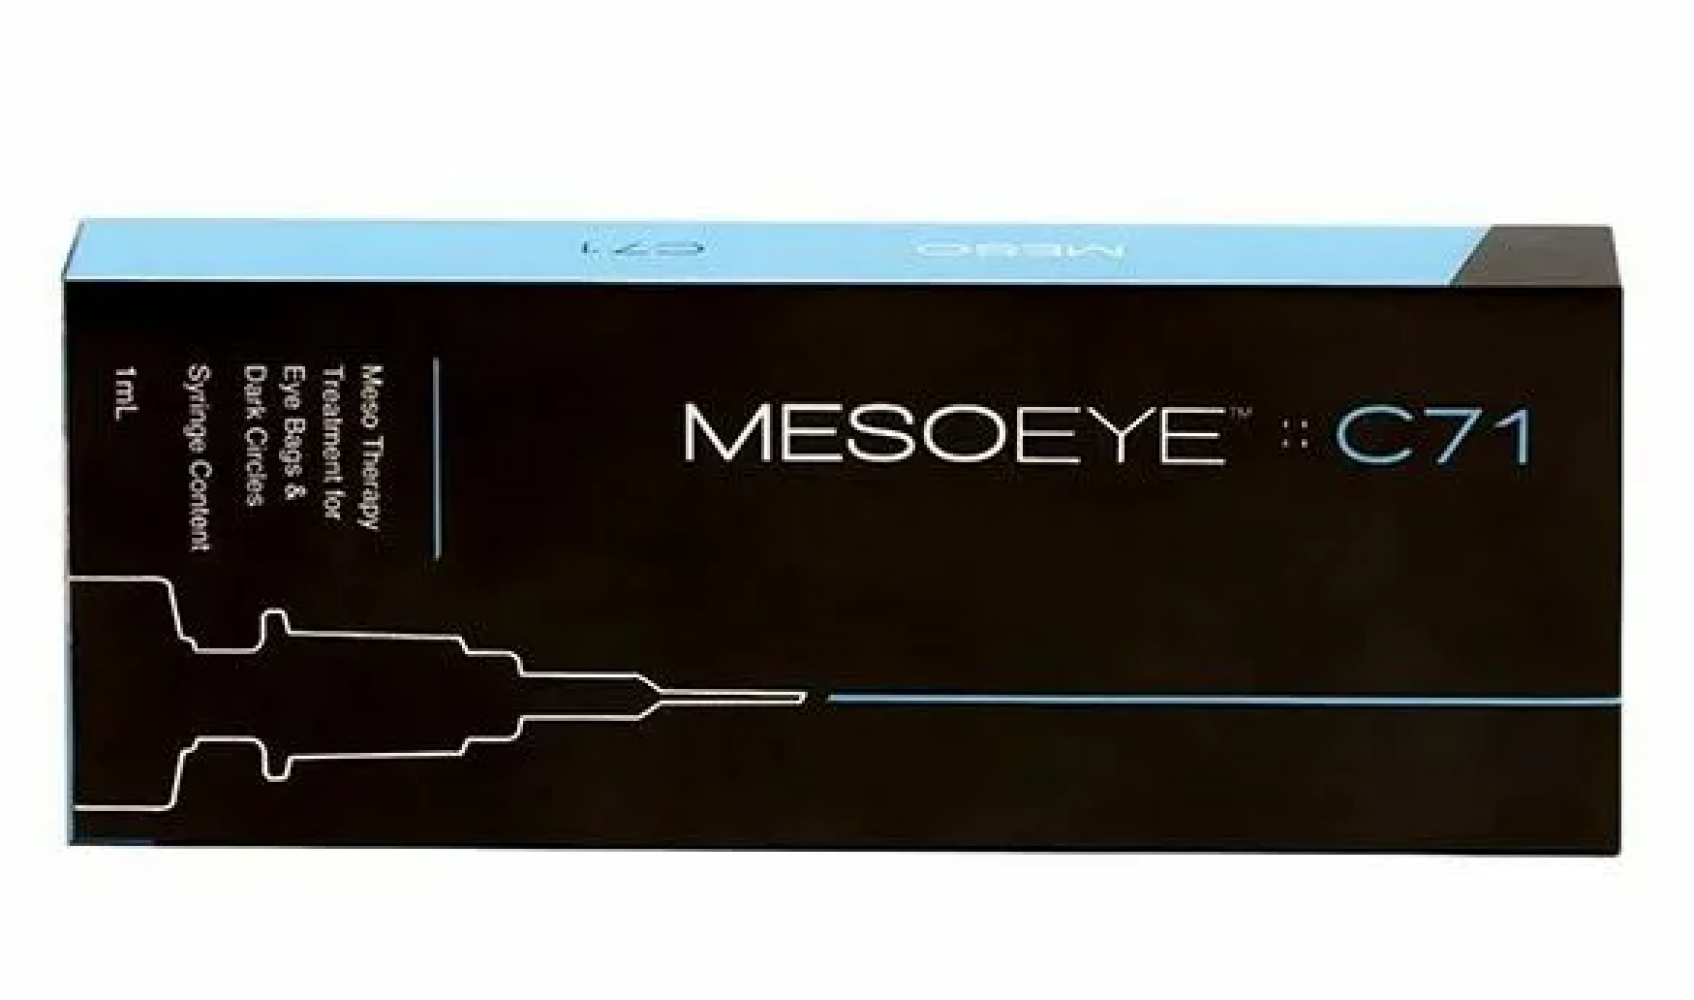 Мезоай с 71. MESOEYE c71™. Meso Eye c 71 (1 мл). Препарат MESOEYE с71. Meso-Eye c71 1,0 ml.